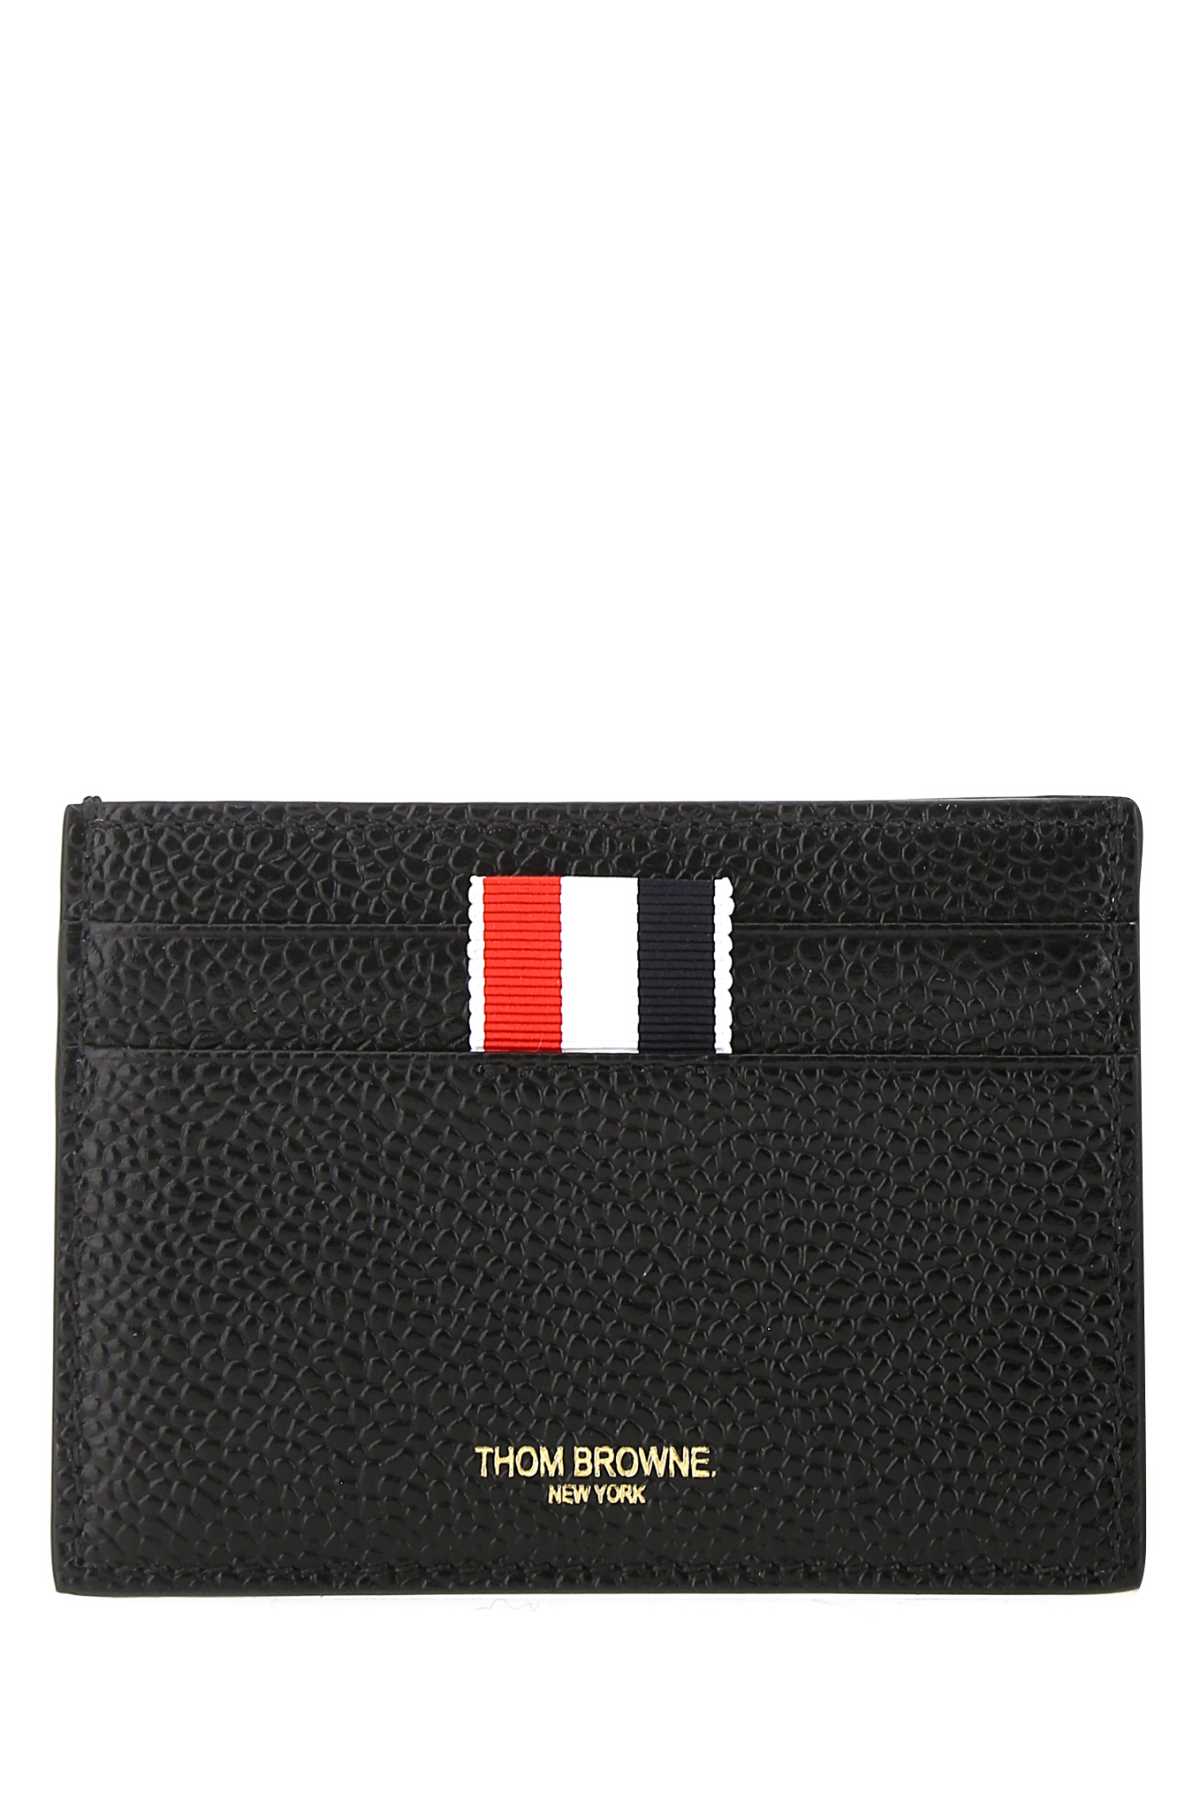 Thom Browne Black Leather Card Holder In 001